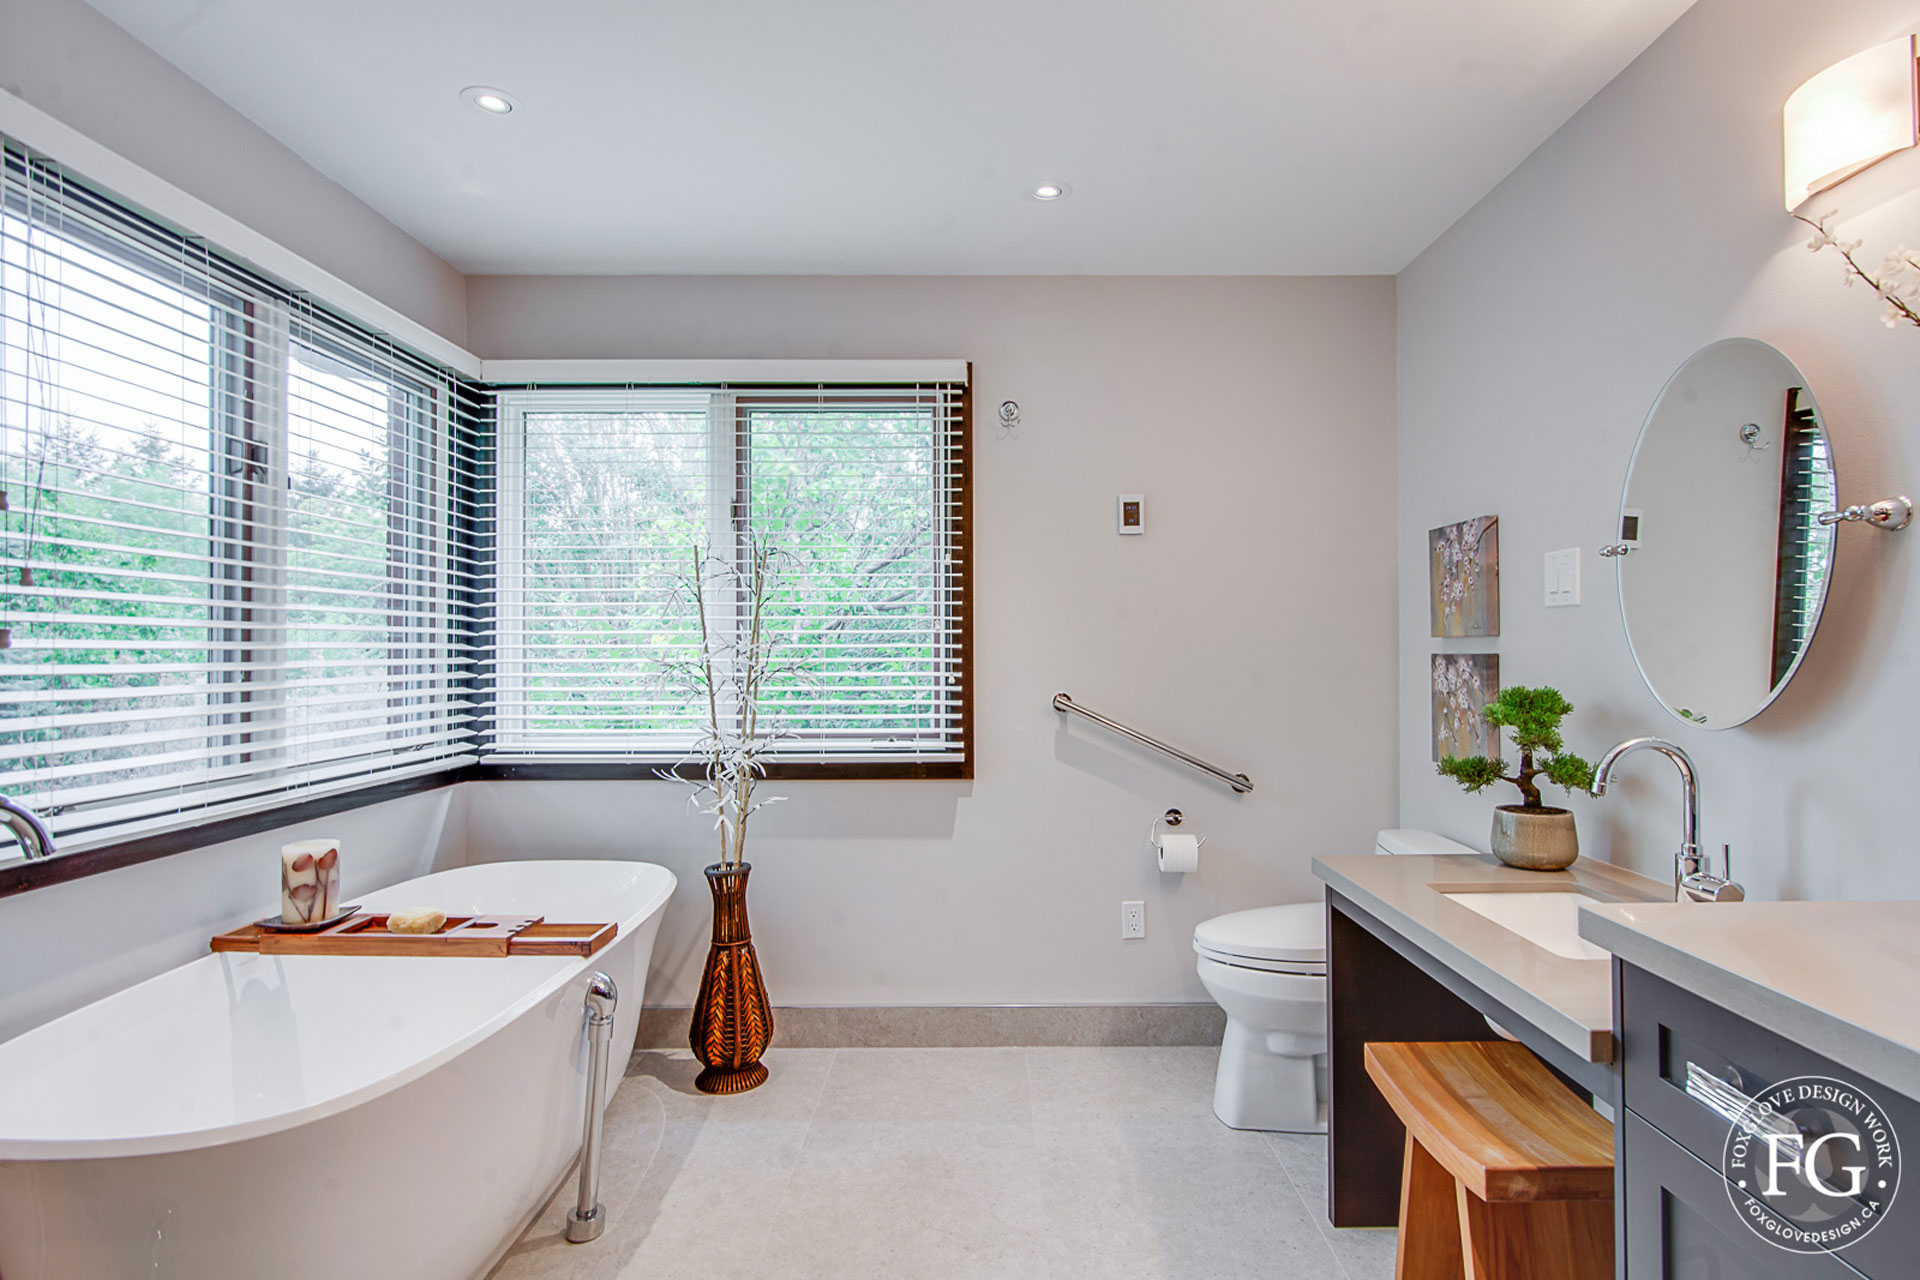 Foxglove Design-Bathroom Renovation for Elderly in Barrie